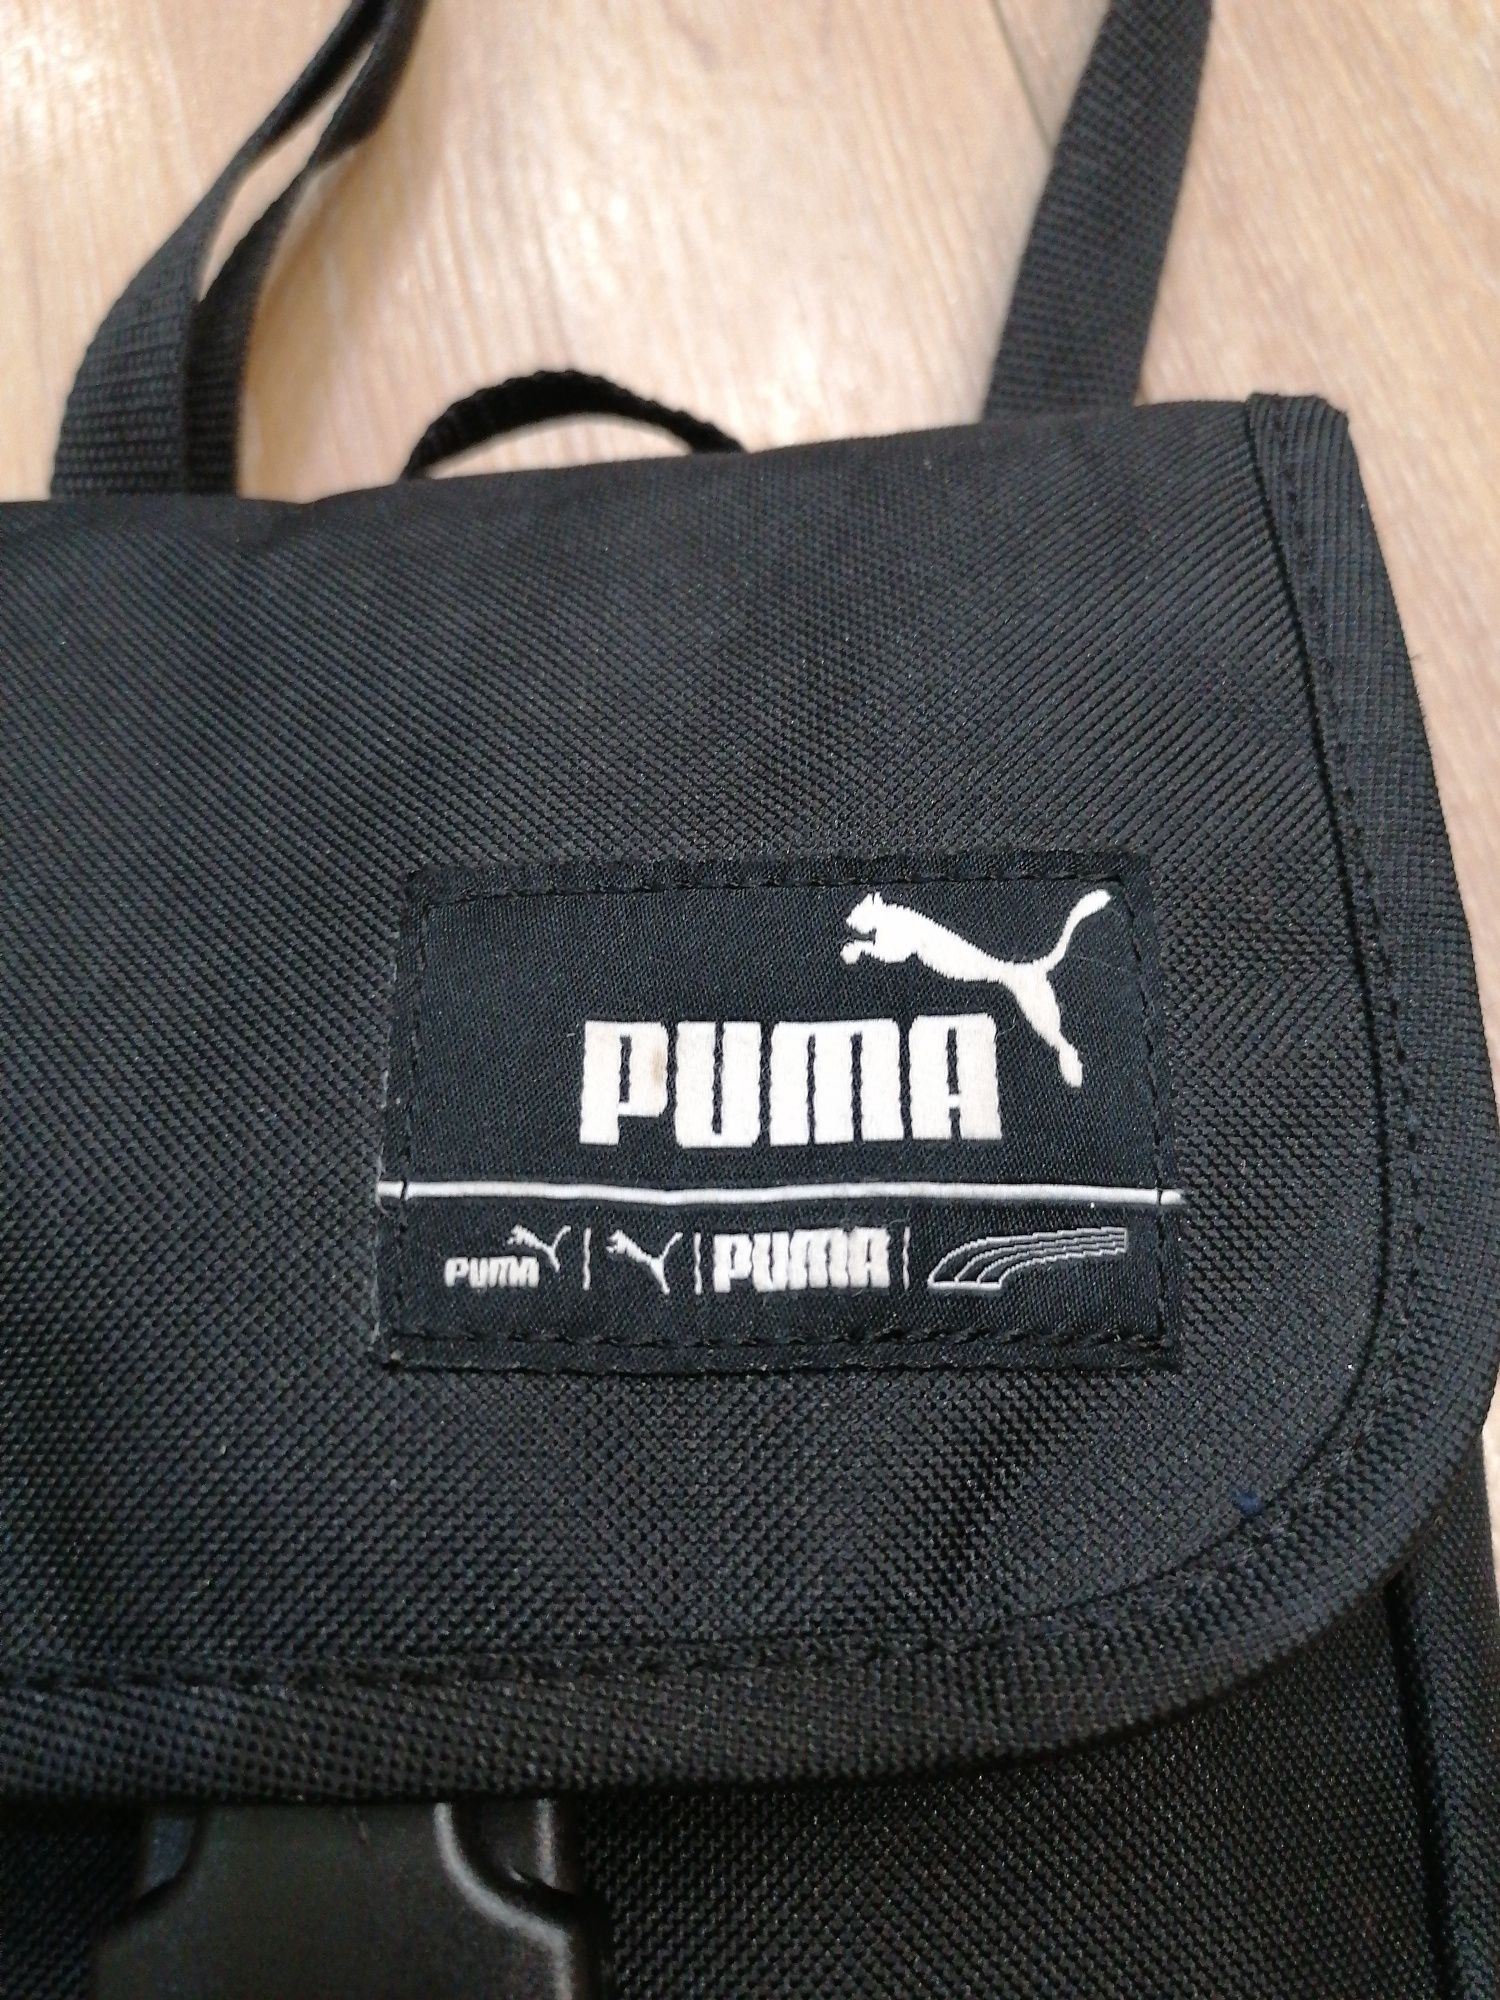 Puma чанта унисекс original